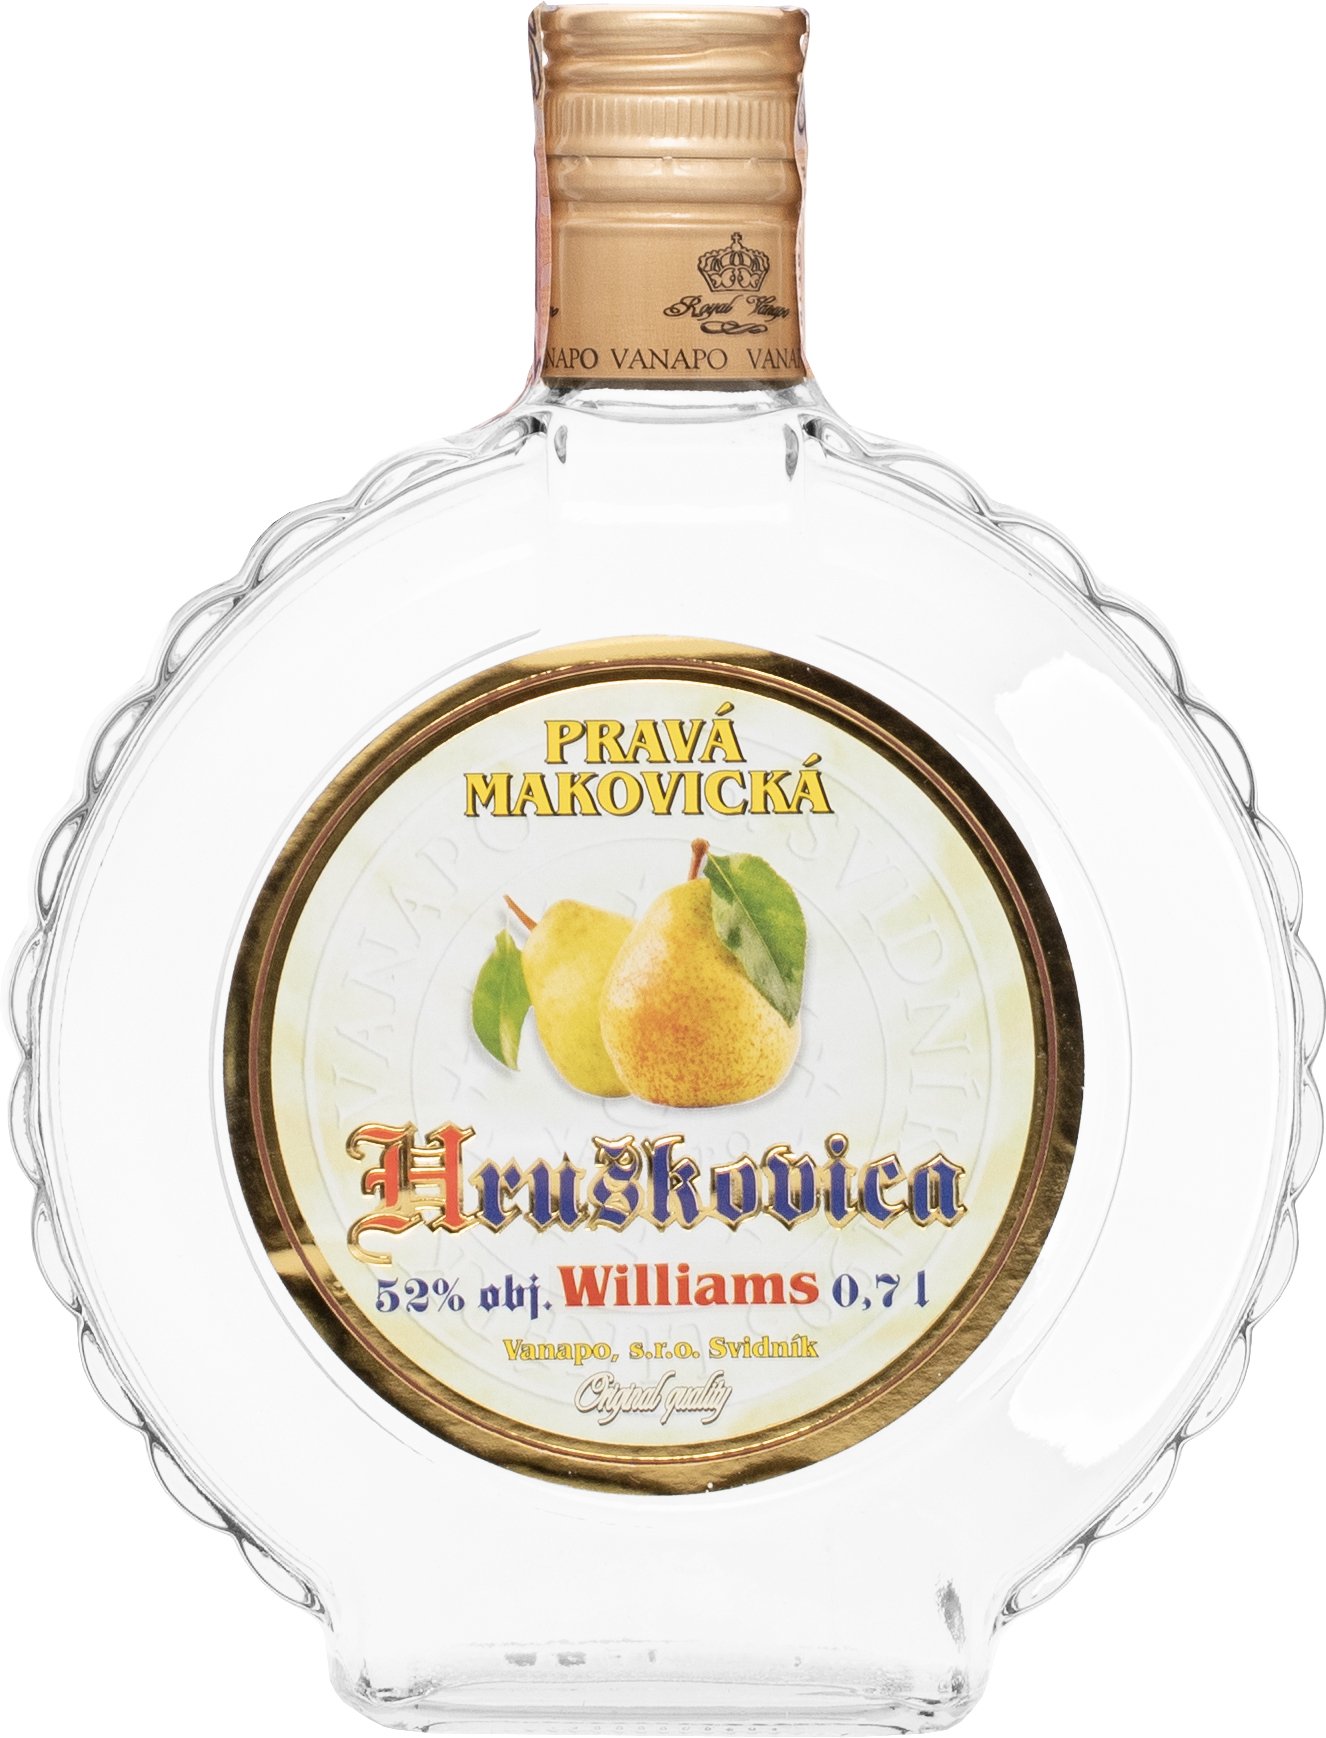 Vanapo Hruškovica Pravá Makovická 52% 0,7l